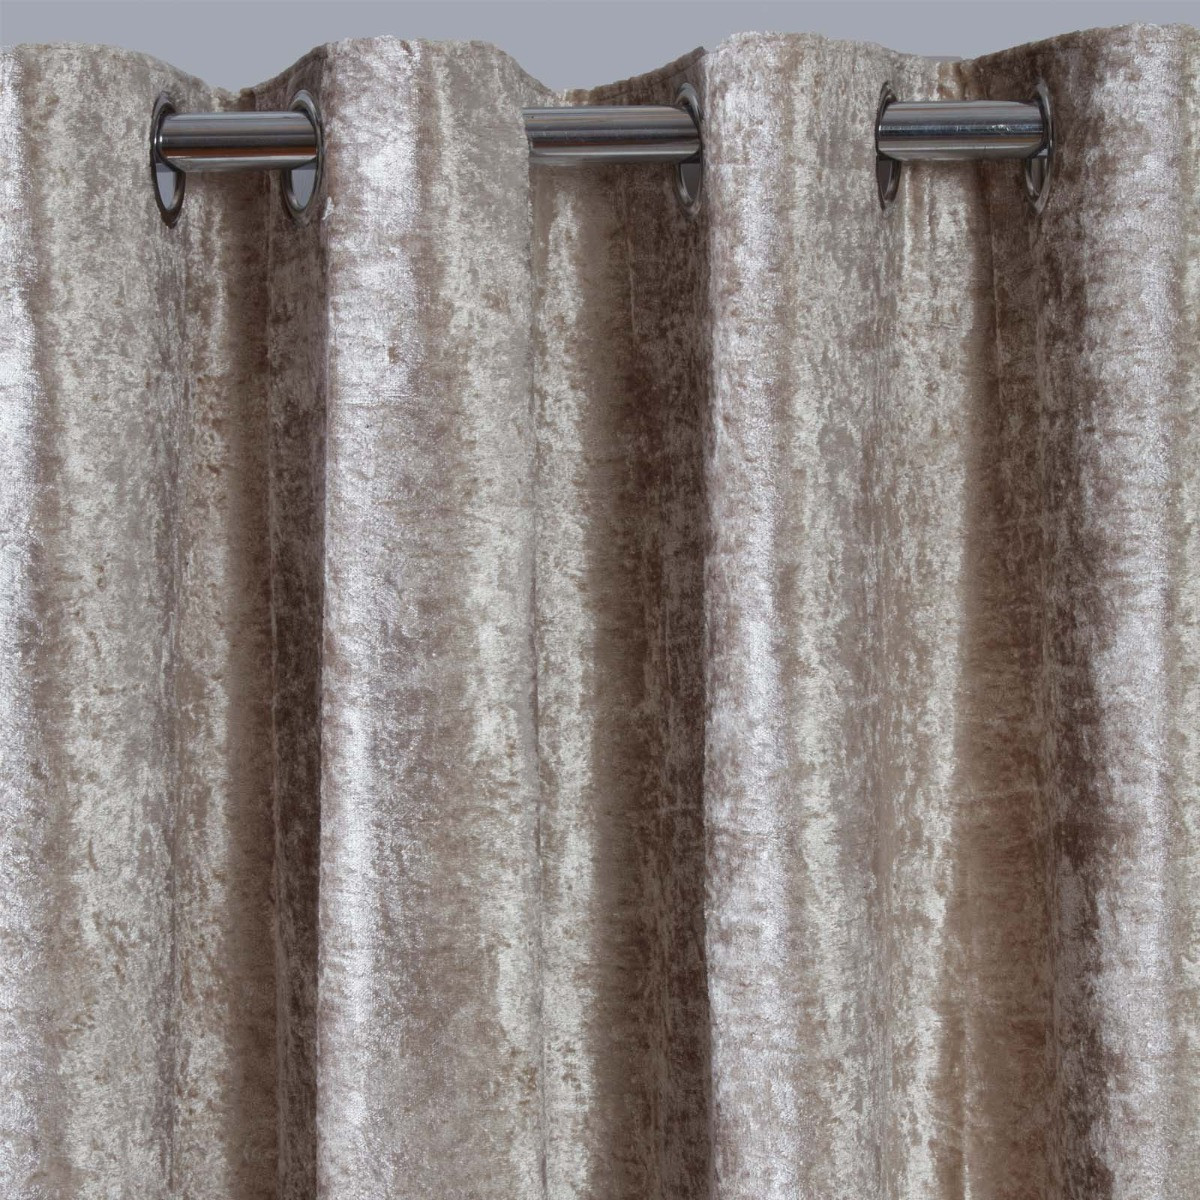 Sienna Home Crushed Velvet Eyelet Curtains - Natural Gold 90" x 54">